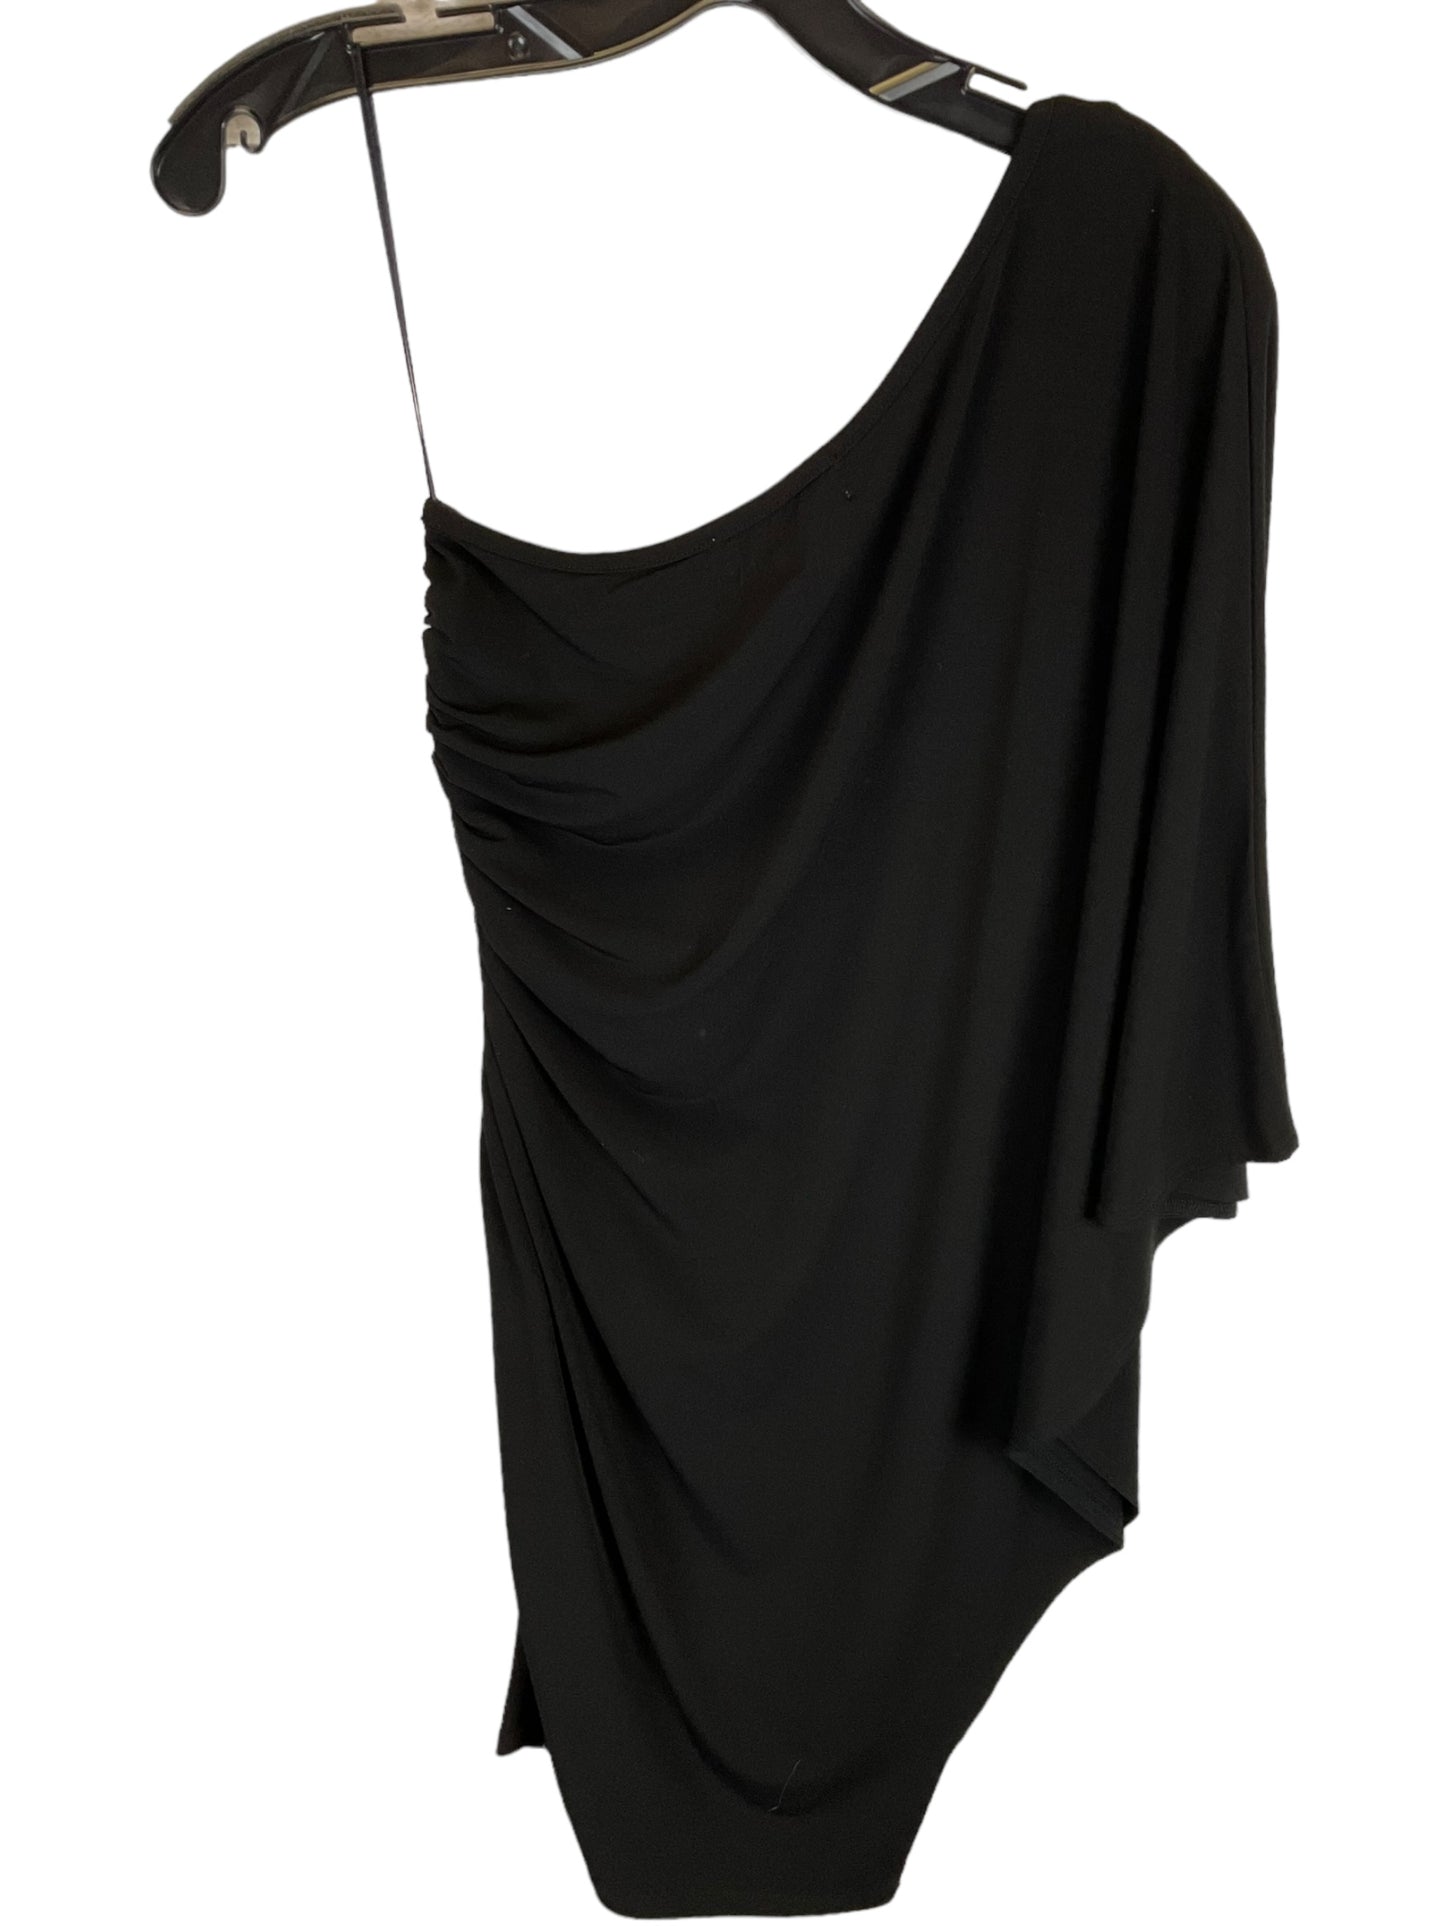 Dress Designer By Michael By Michael Kors  Size: 4